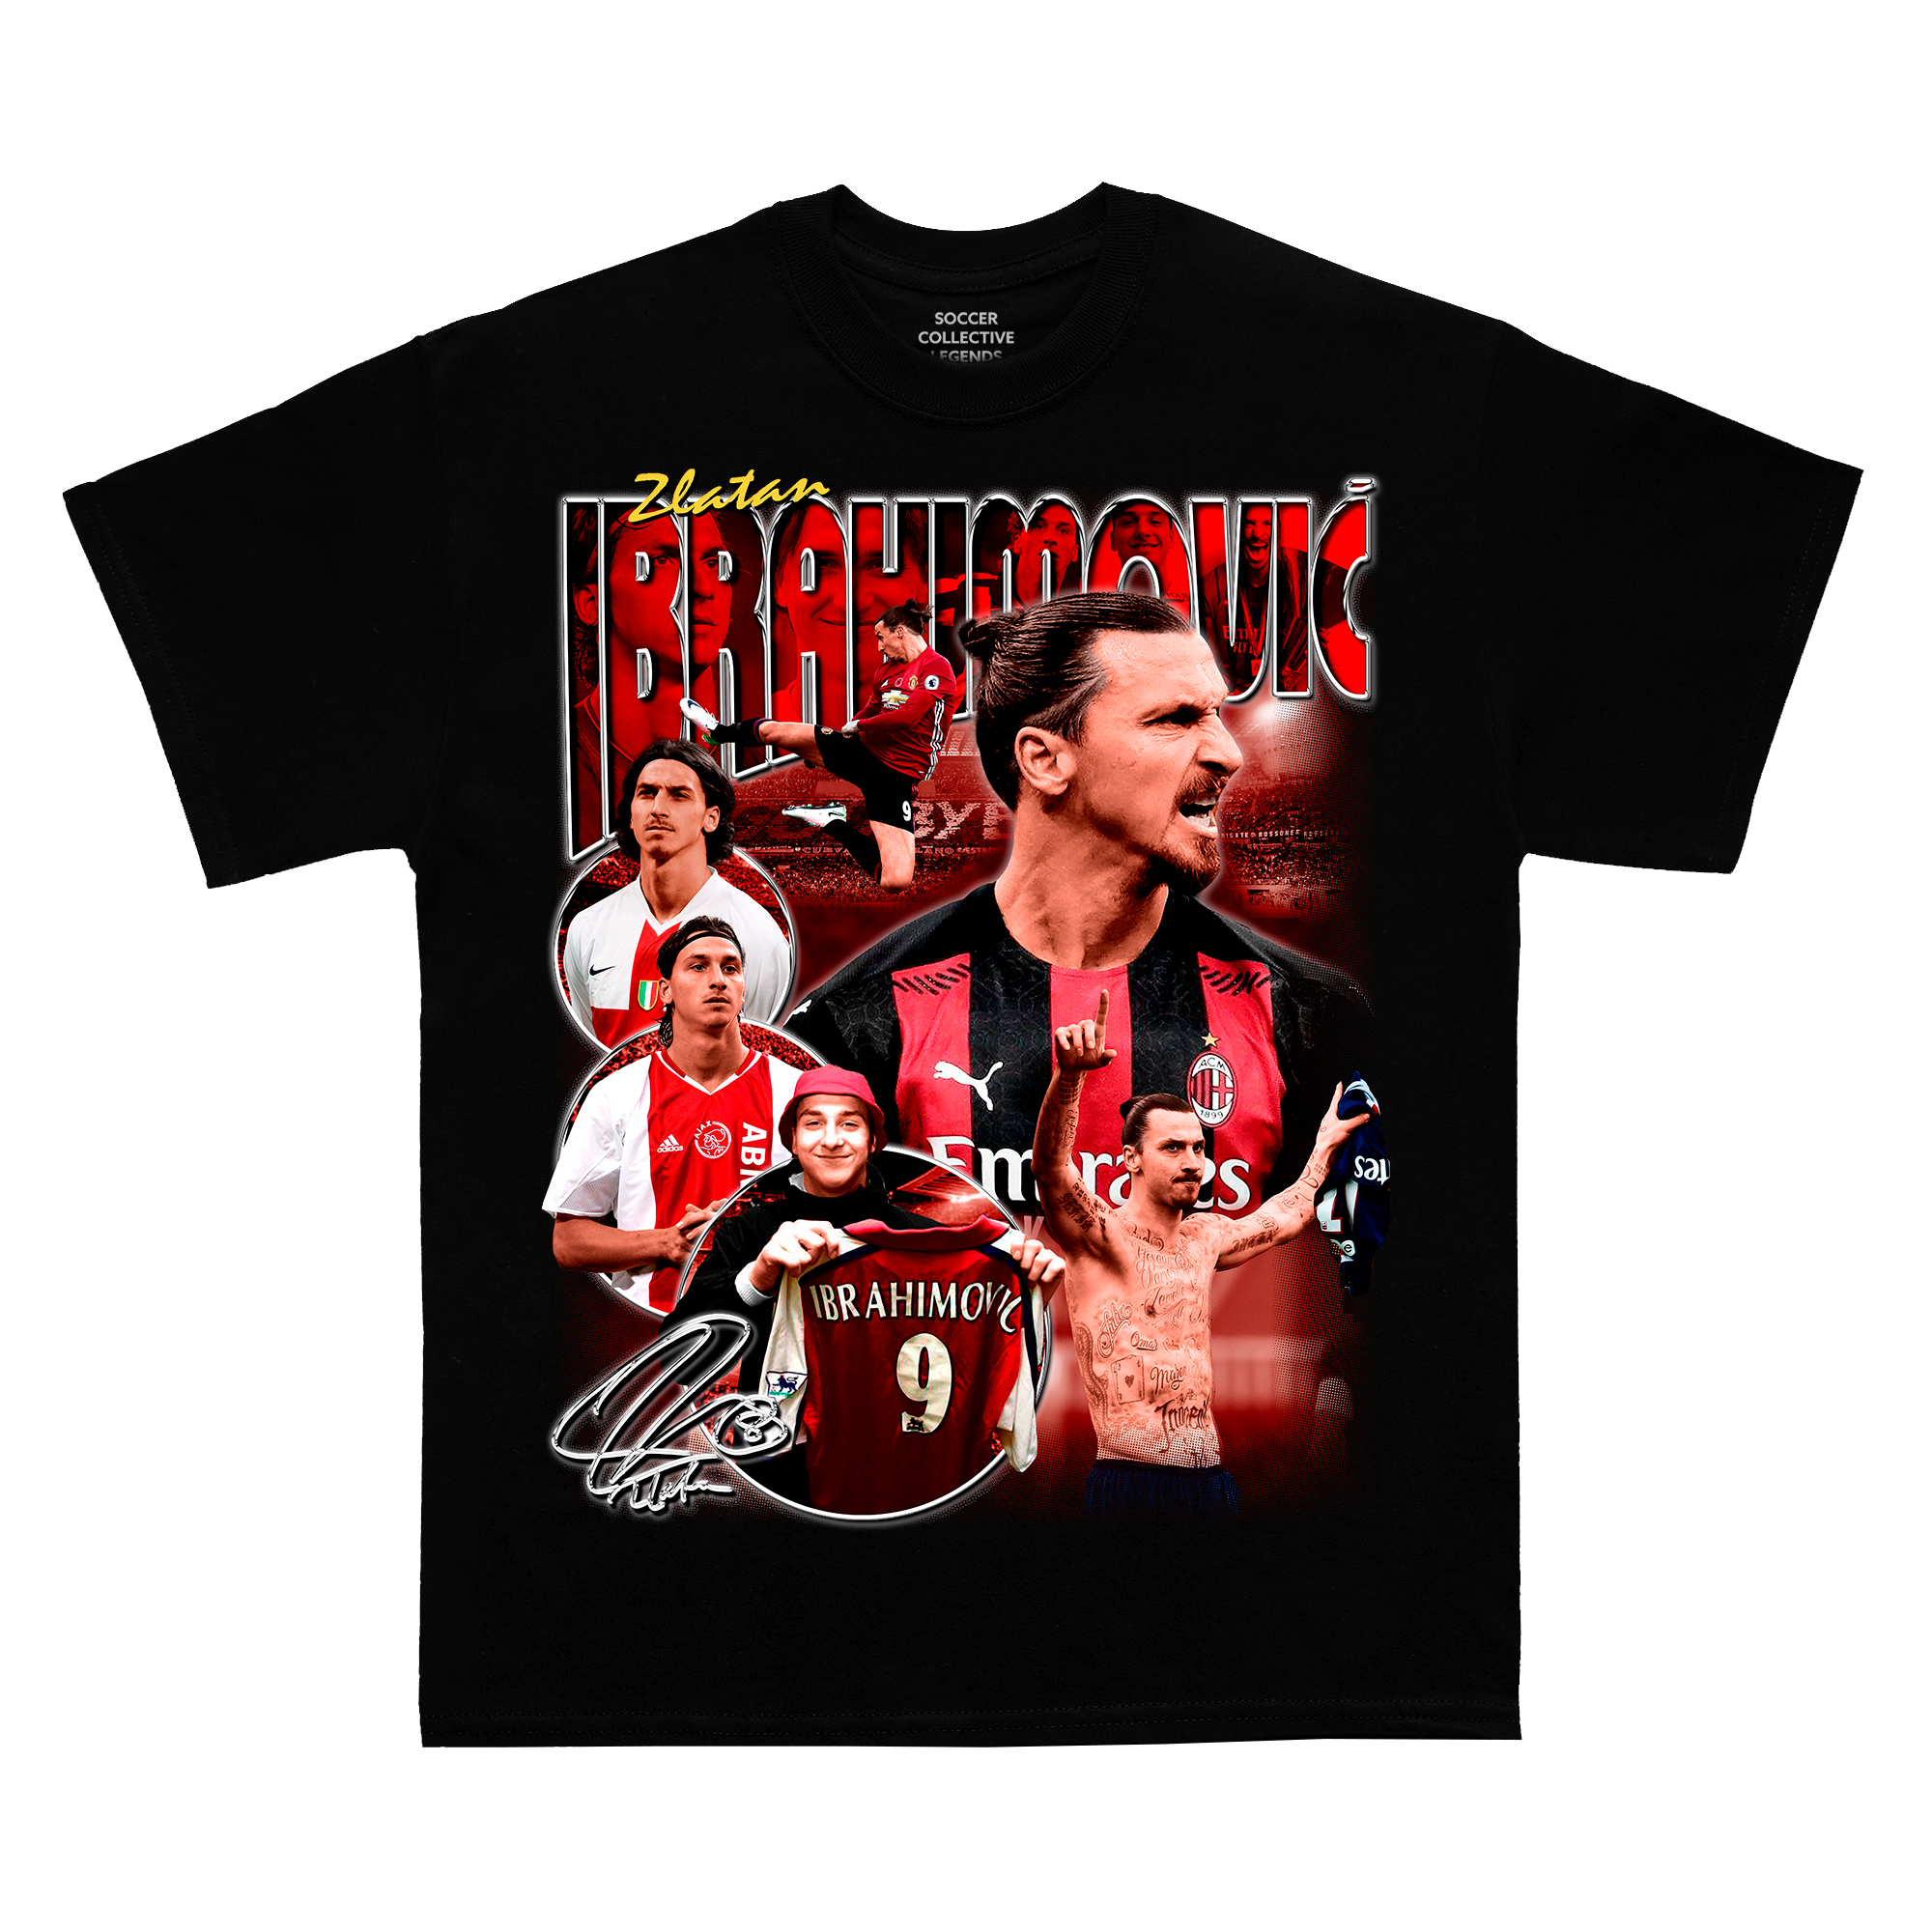 Camiseta Legends "Zlatan Ibrahimovic" - www.soccercollective.com.br